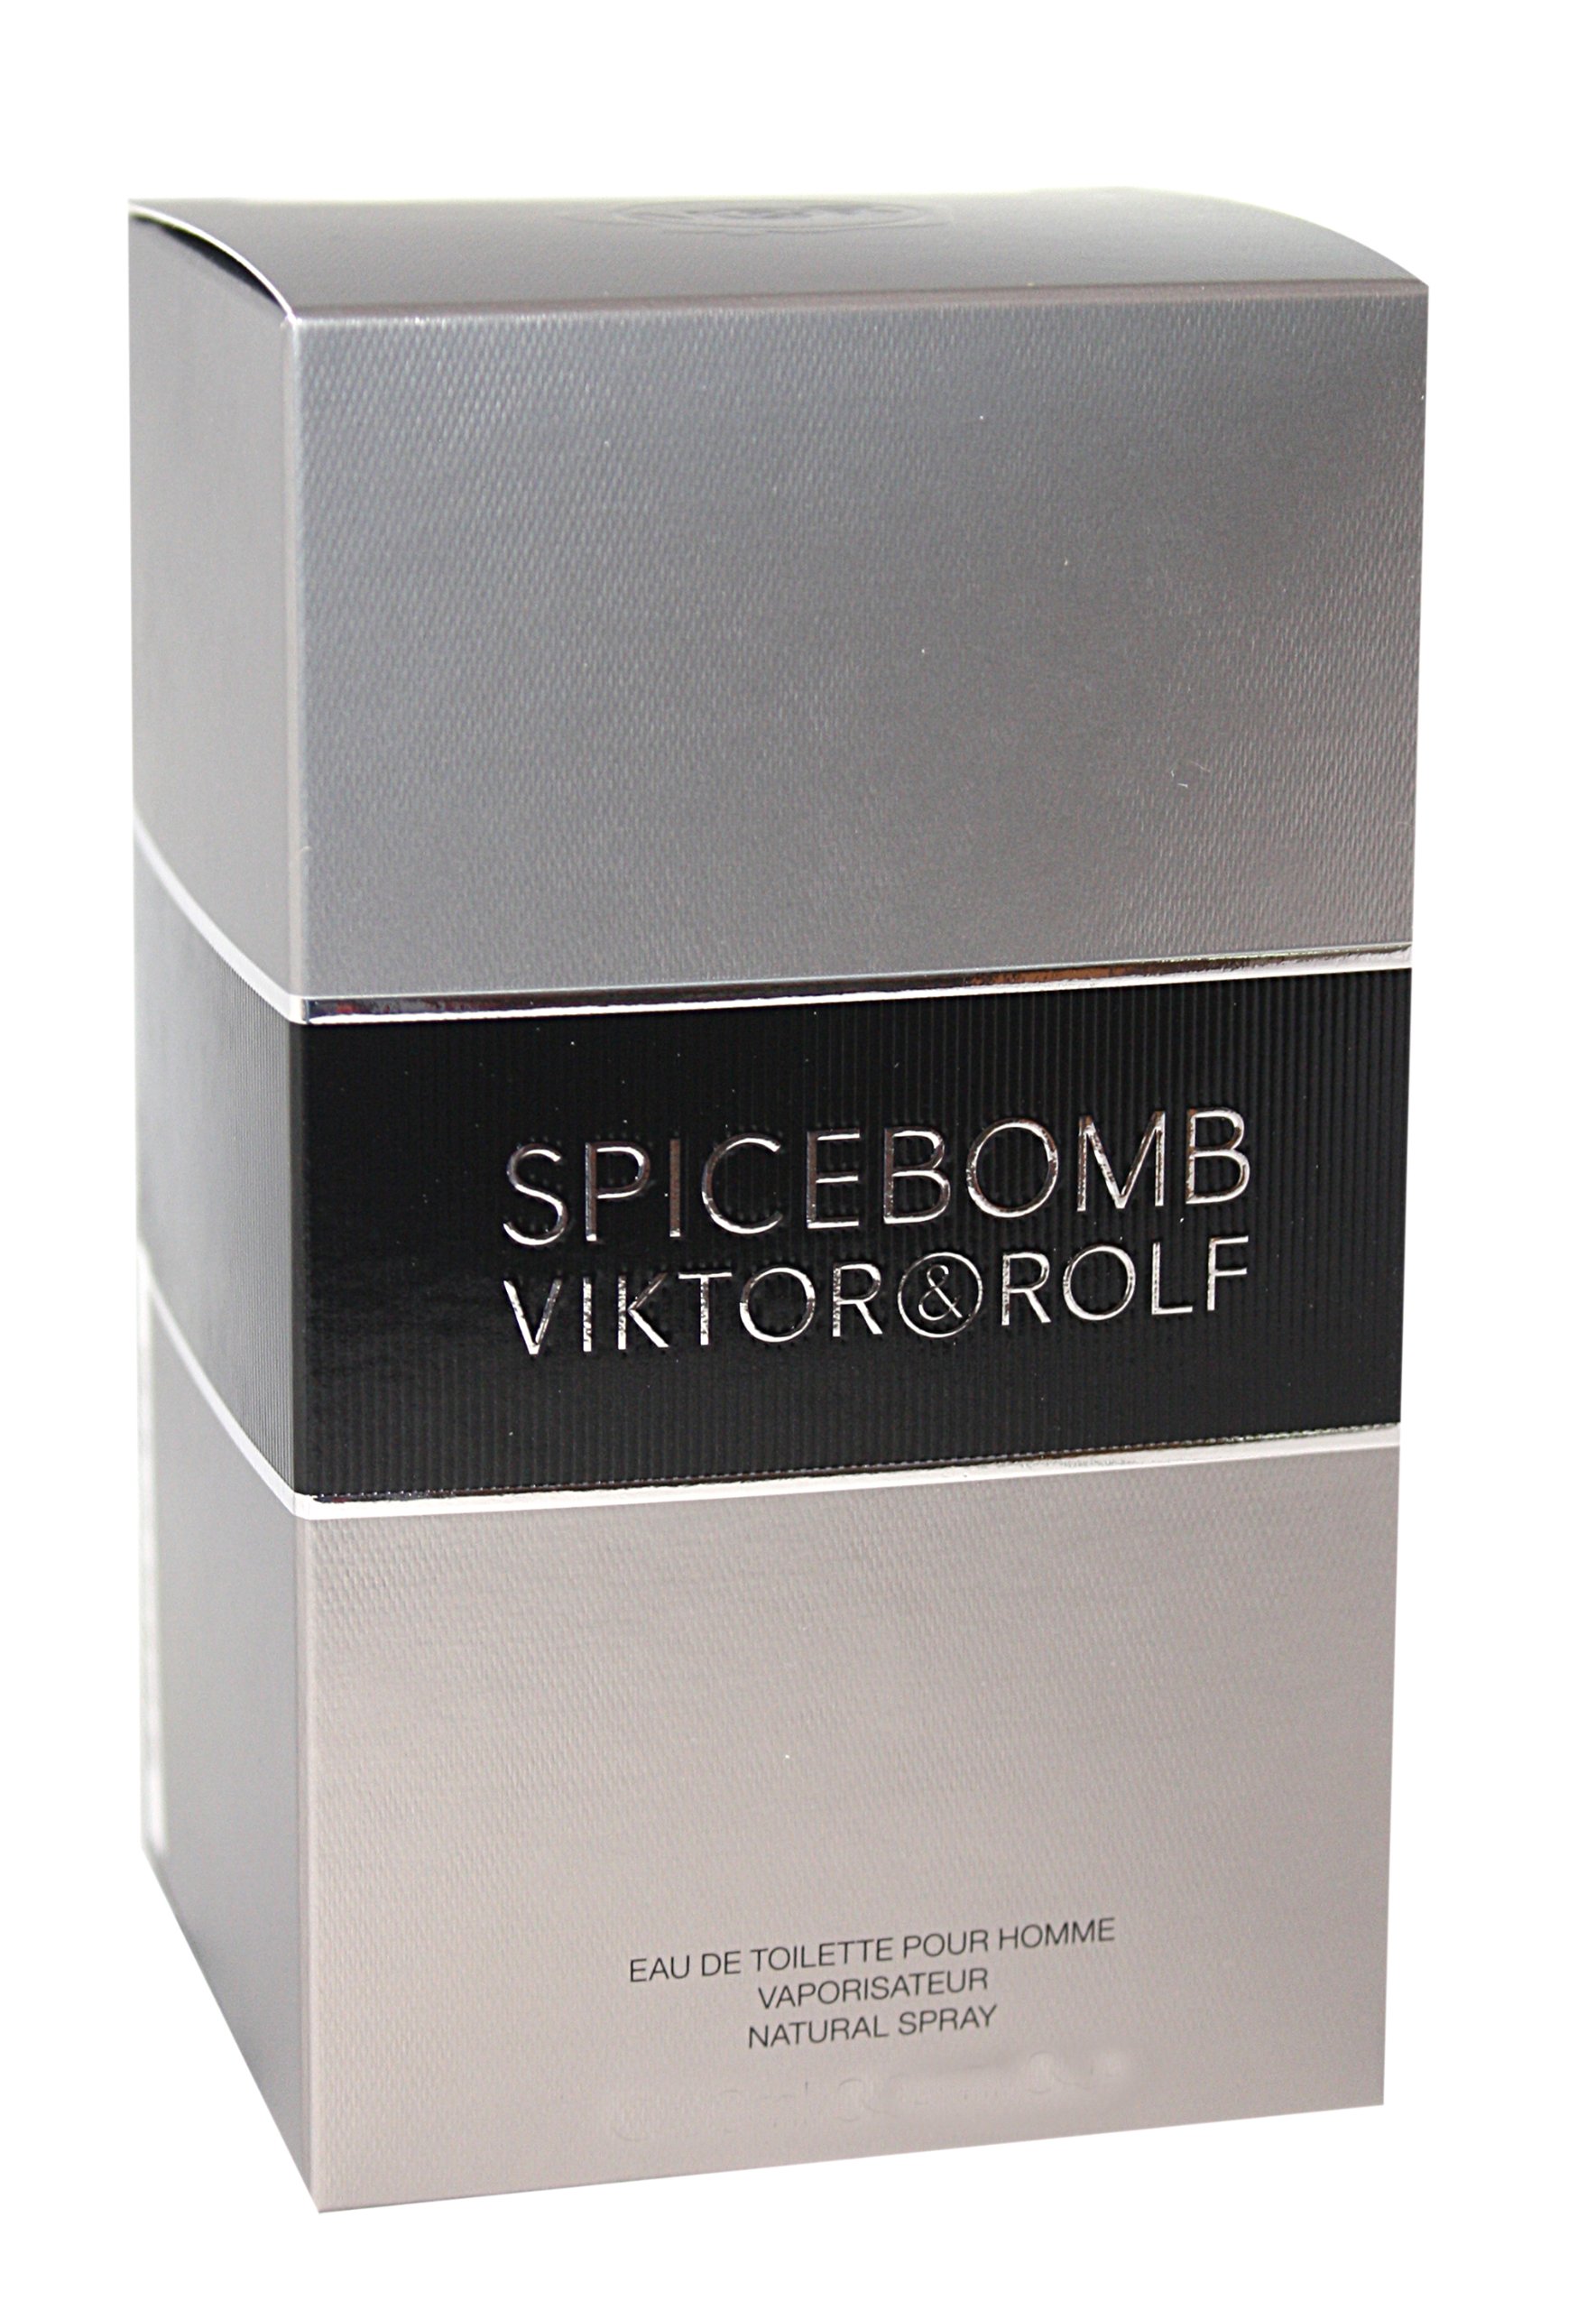 Viktor and Rolf Spicebomb Eau de Toilette Spray for Men, 1.7 Ounce